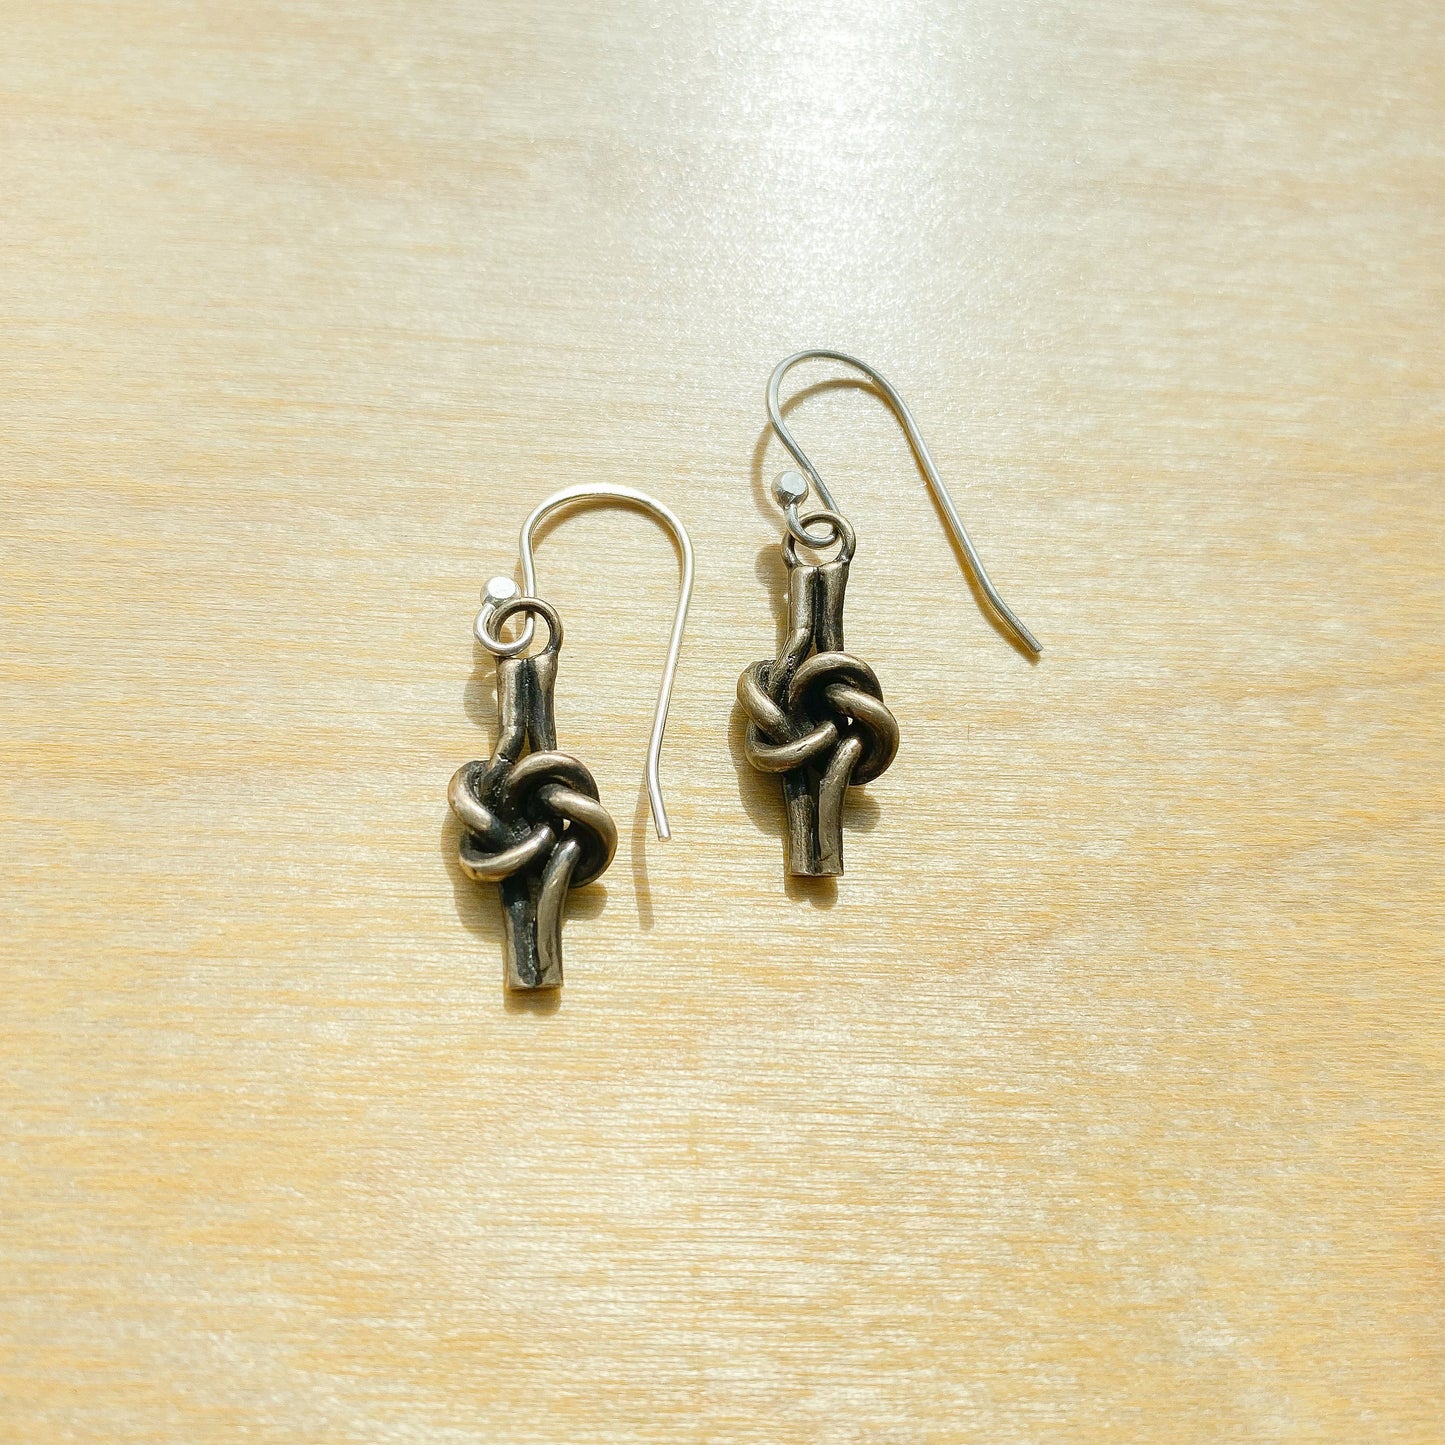 bronze knot earrings and pendant, love knot earrings, friendship knot jewelry, proposal gift, best friend gift